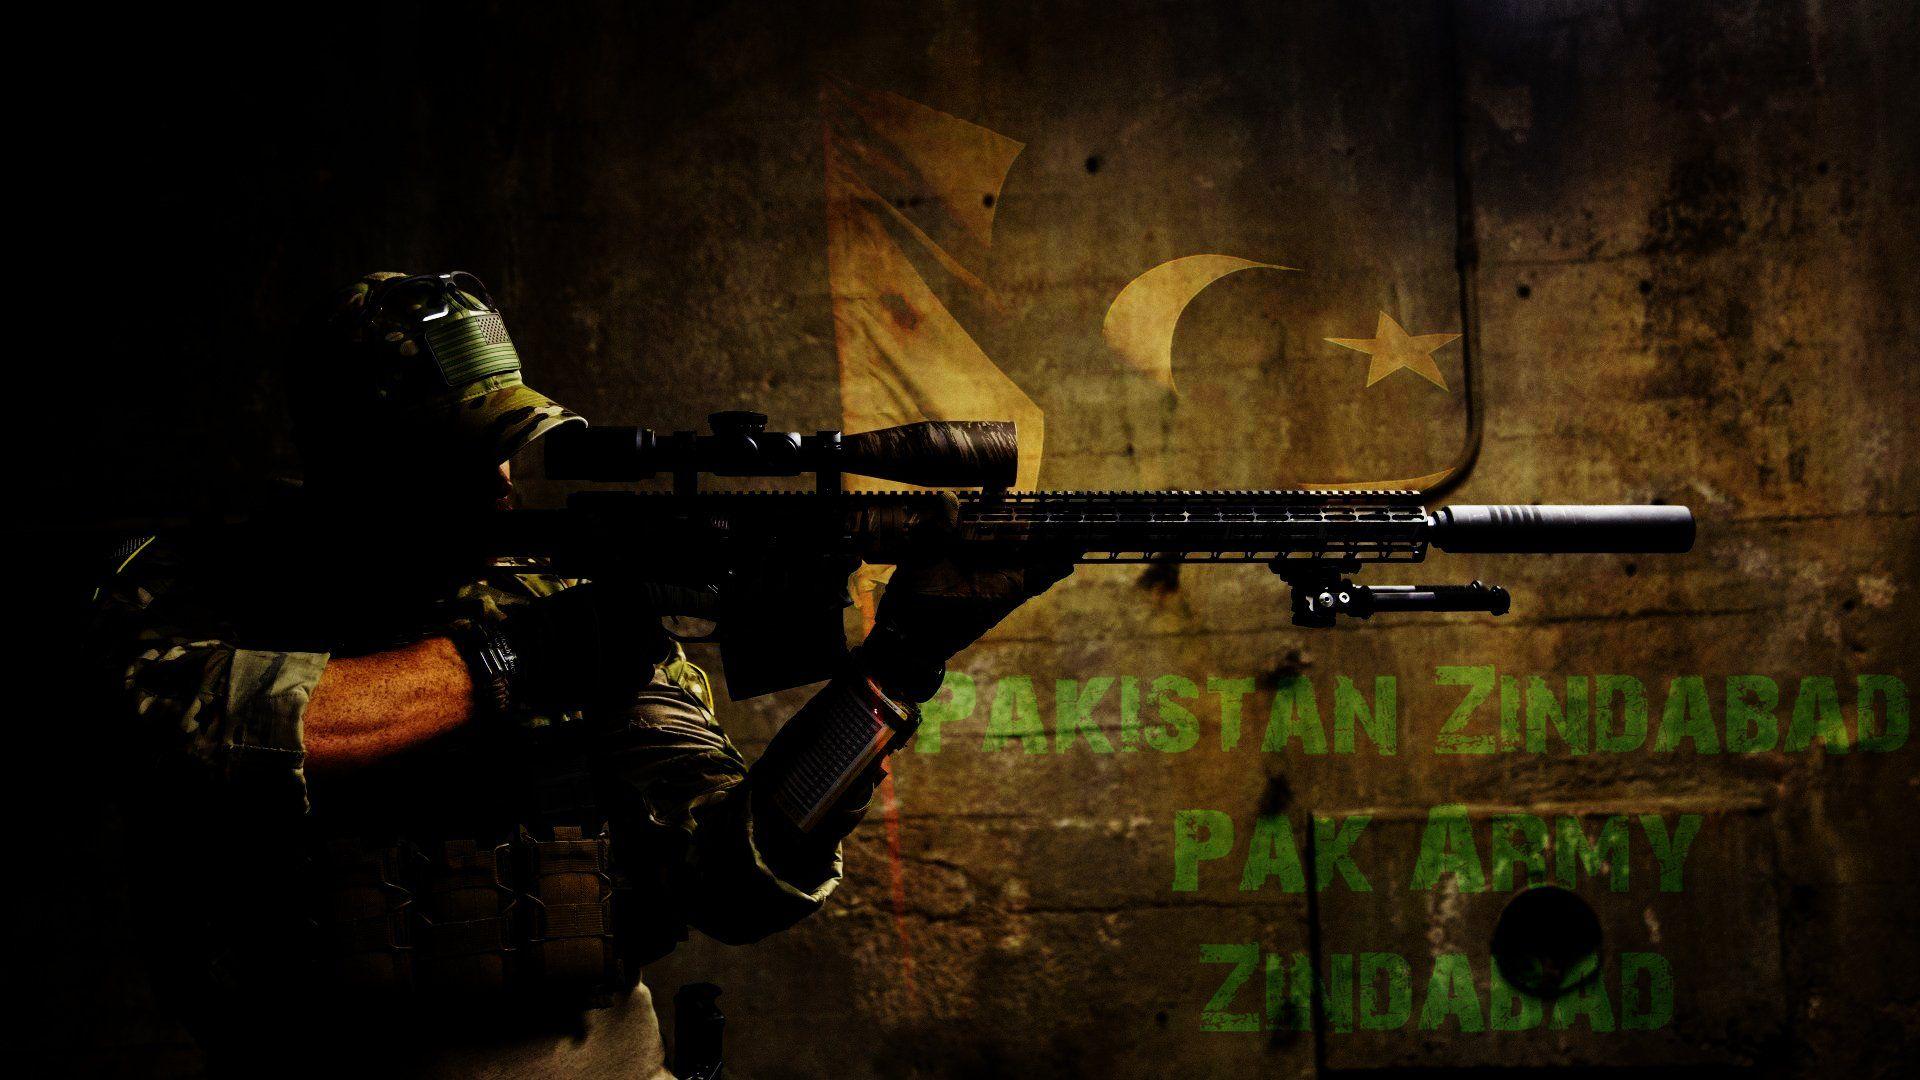 Pakistan Army Wallpapers - Top Free Pakistan Army ...